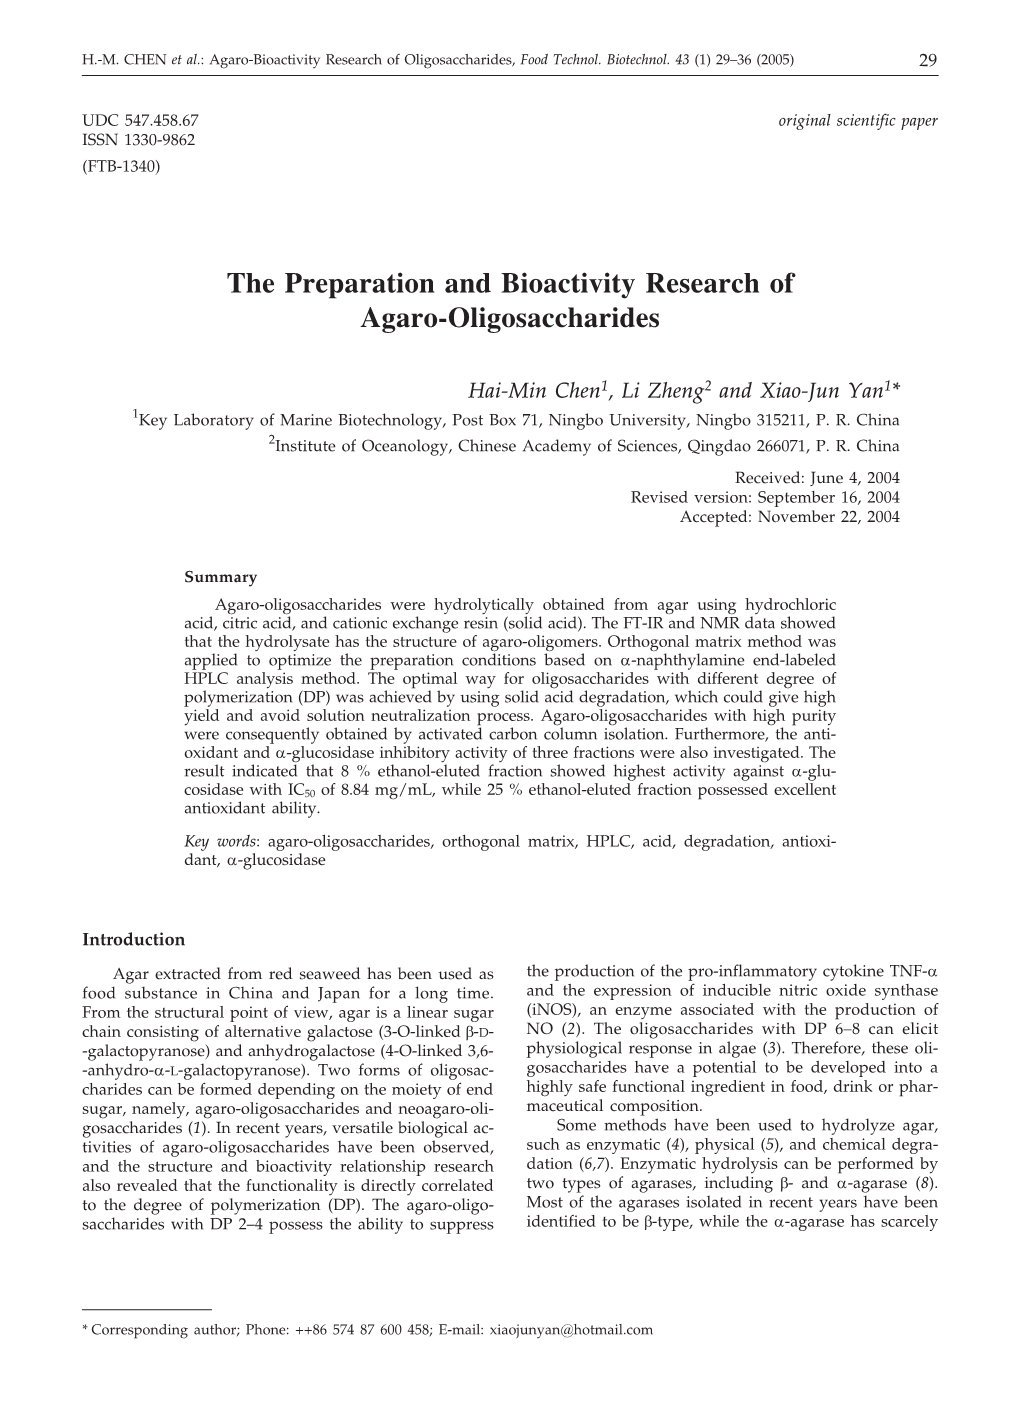 The Preparation and Bioactivity Research of Agaro-Oligosaccharides